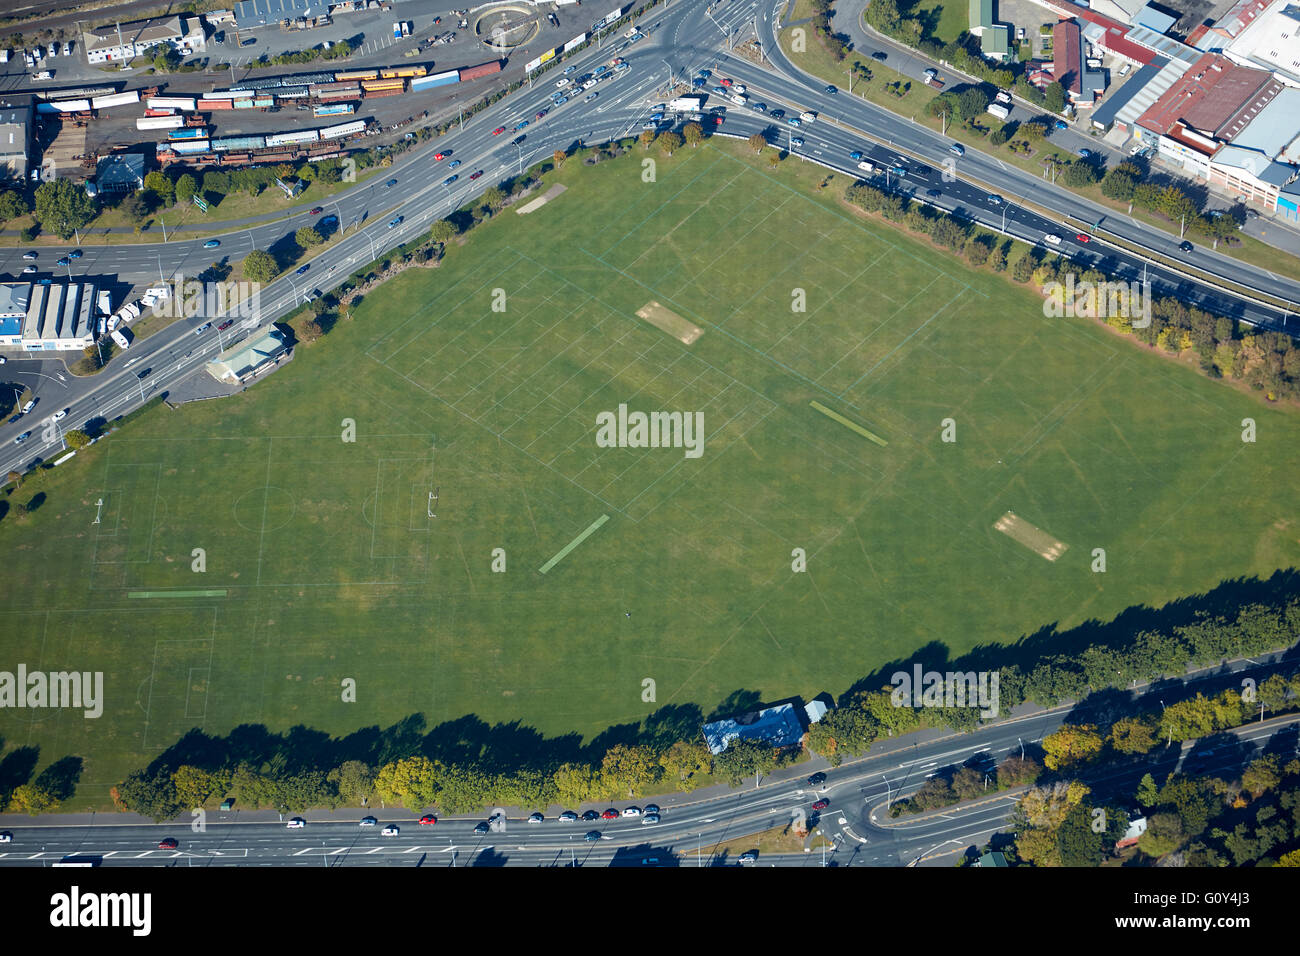 Sports fields at The Oval, Dunedin, Otago, South Island, New Zealand - aerial Stock Photo